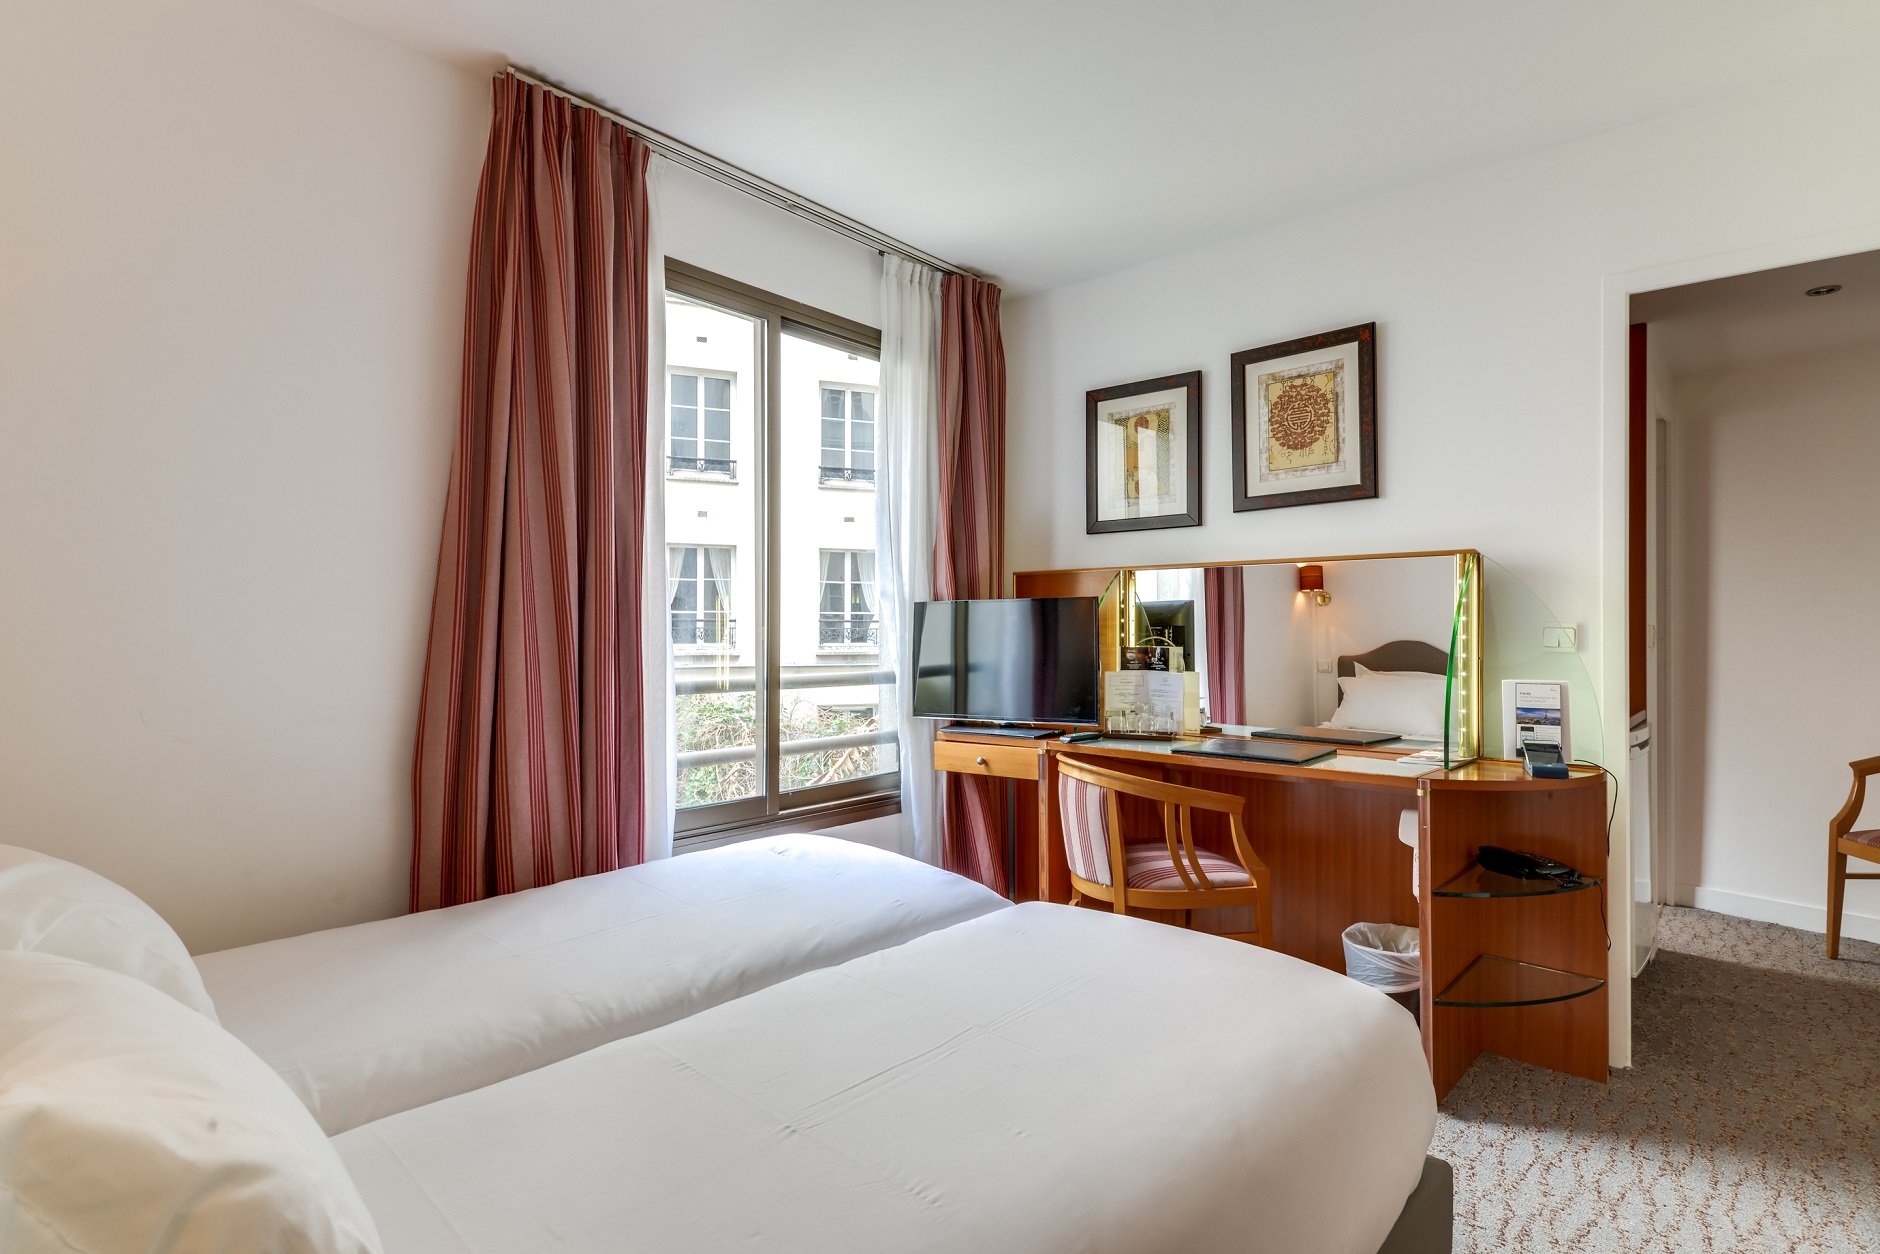 Hotel Villa Luxembourg Paris - Rooms & Suites